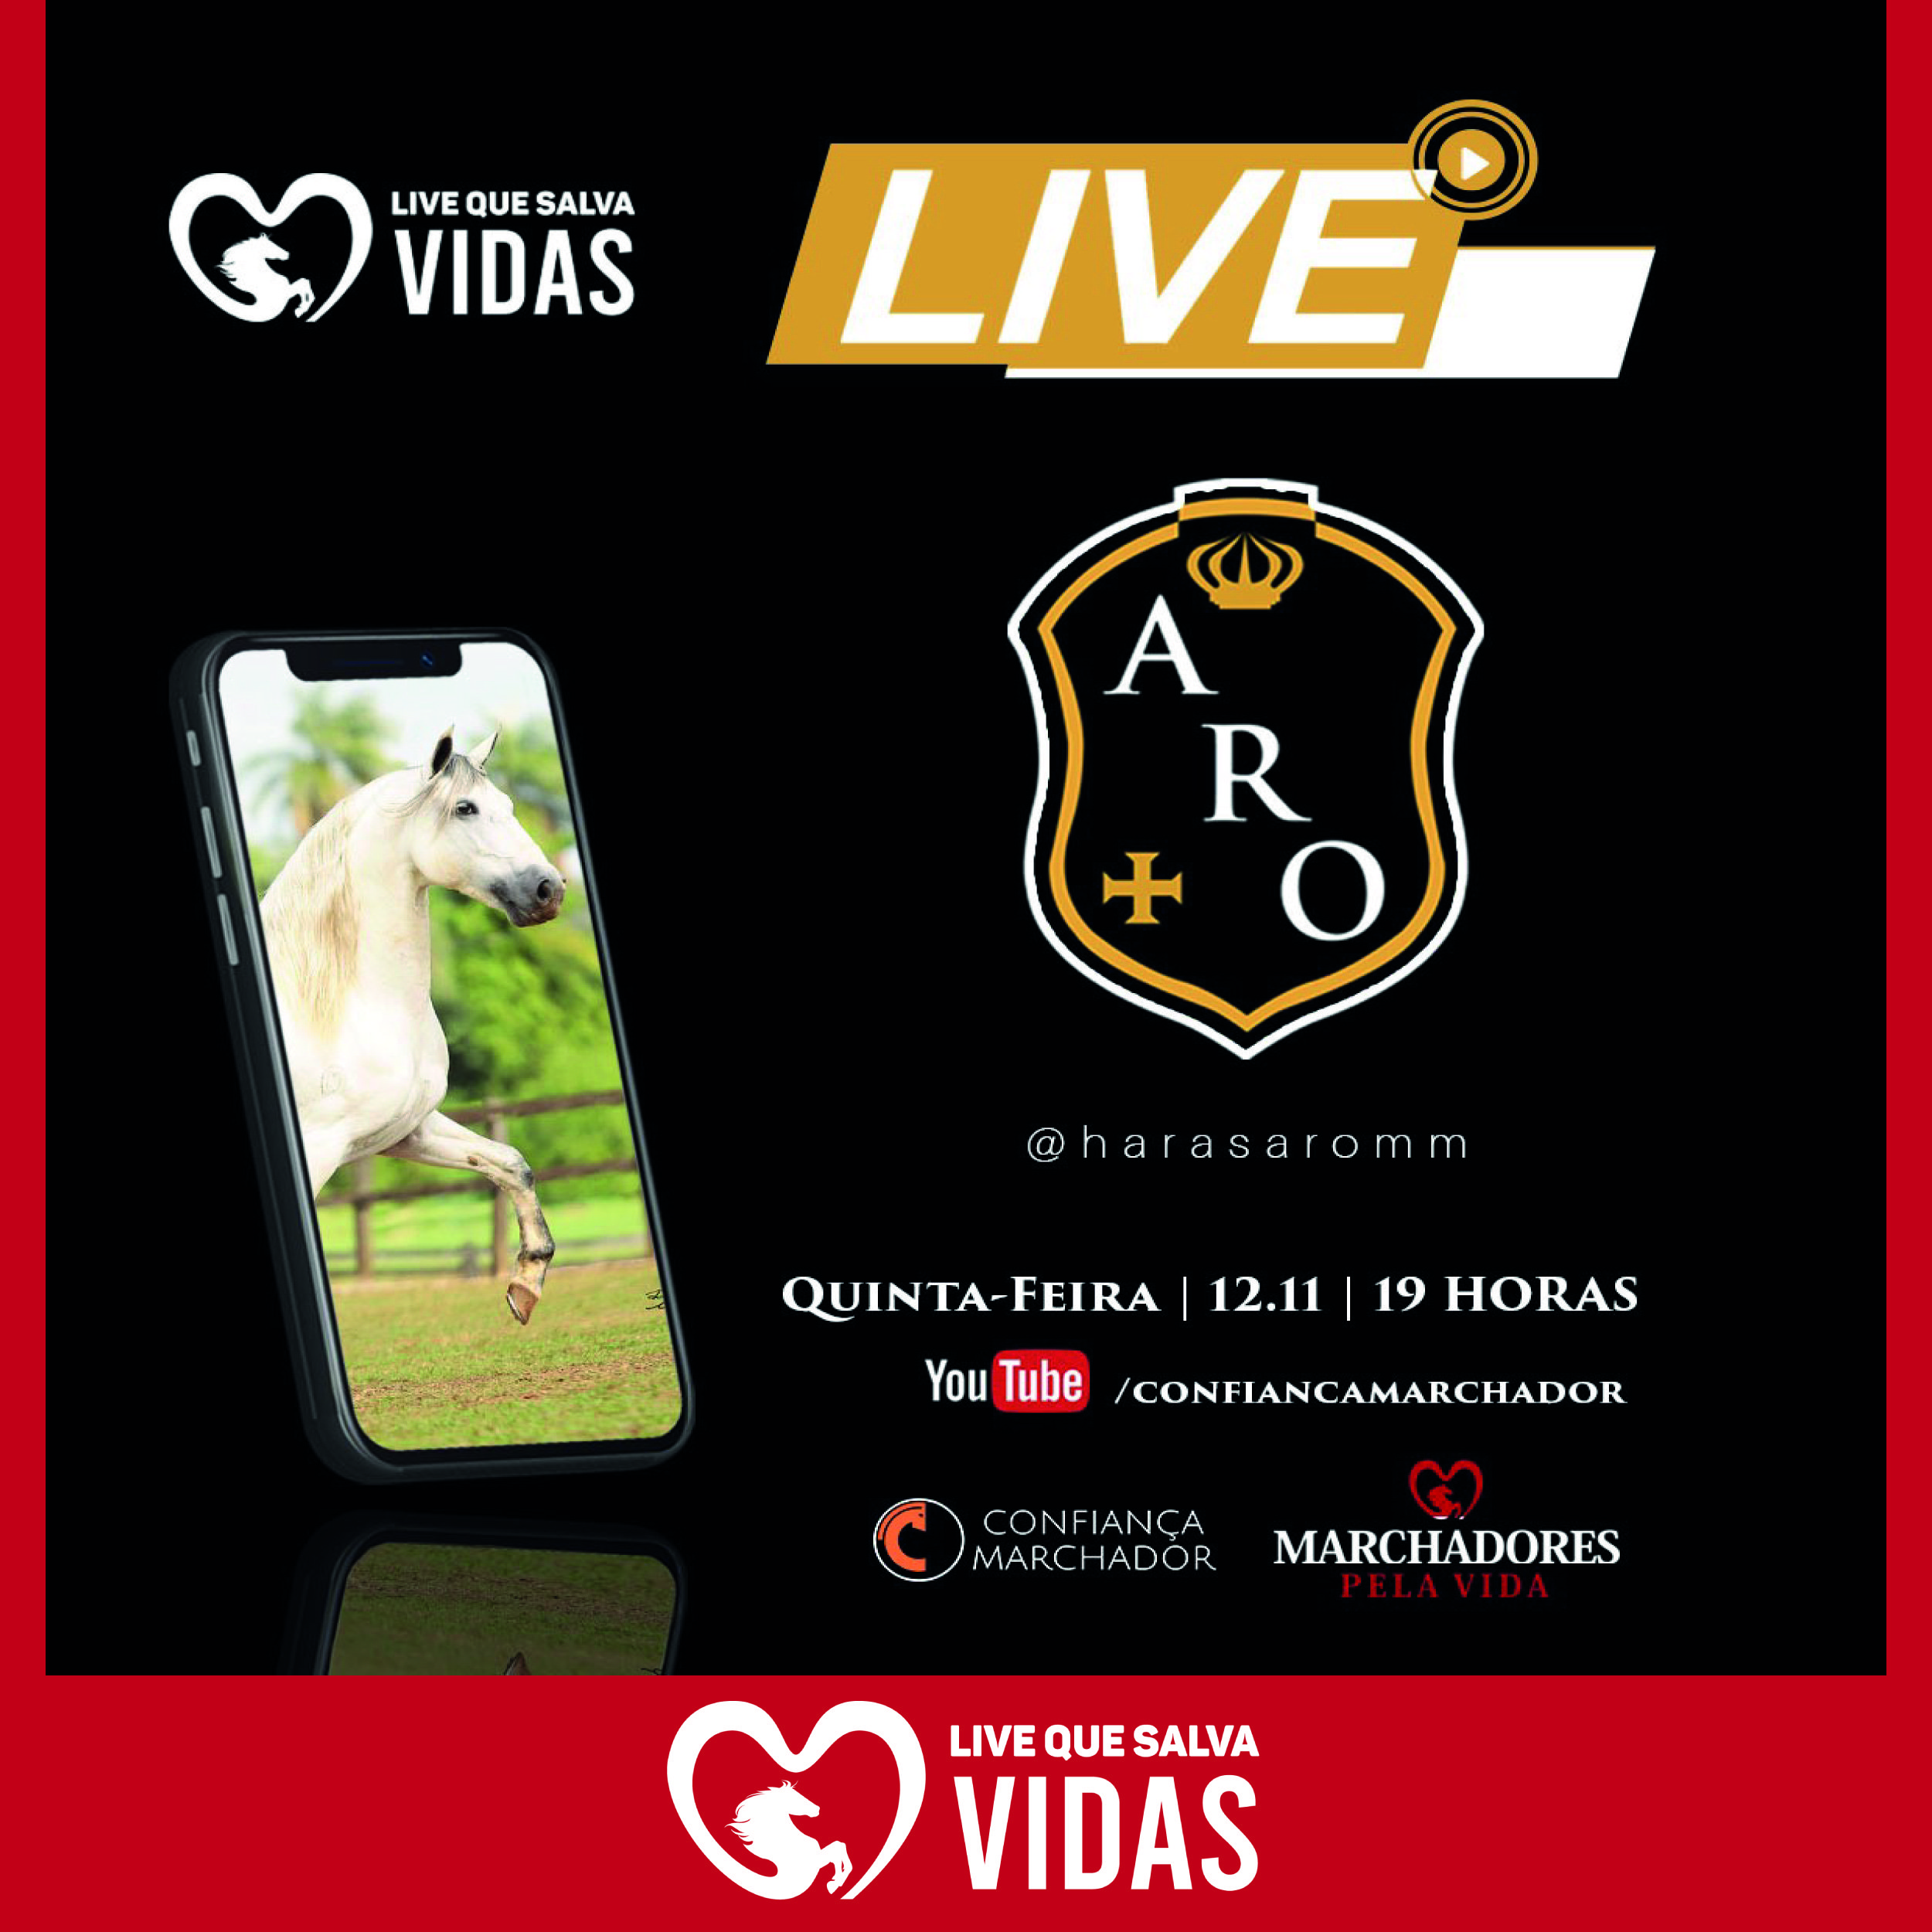 HARAS ARO promove LIVE QUE SALVA VIDAS